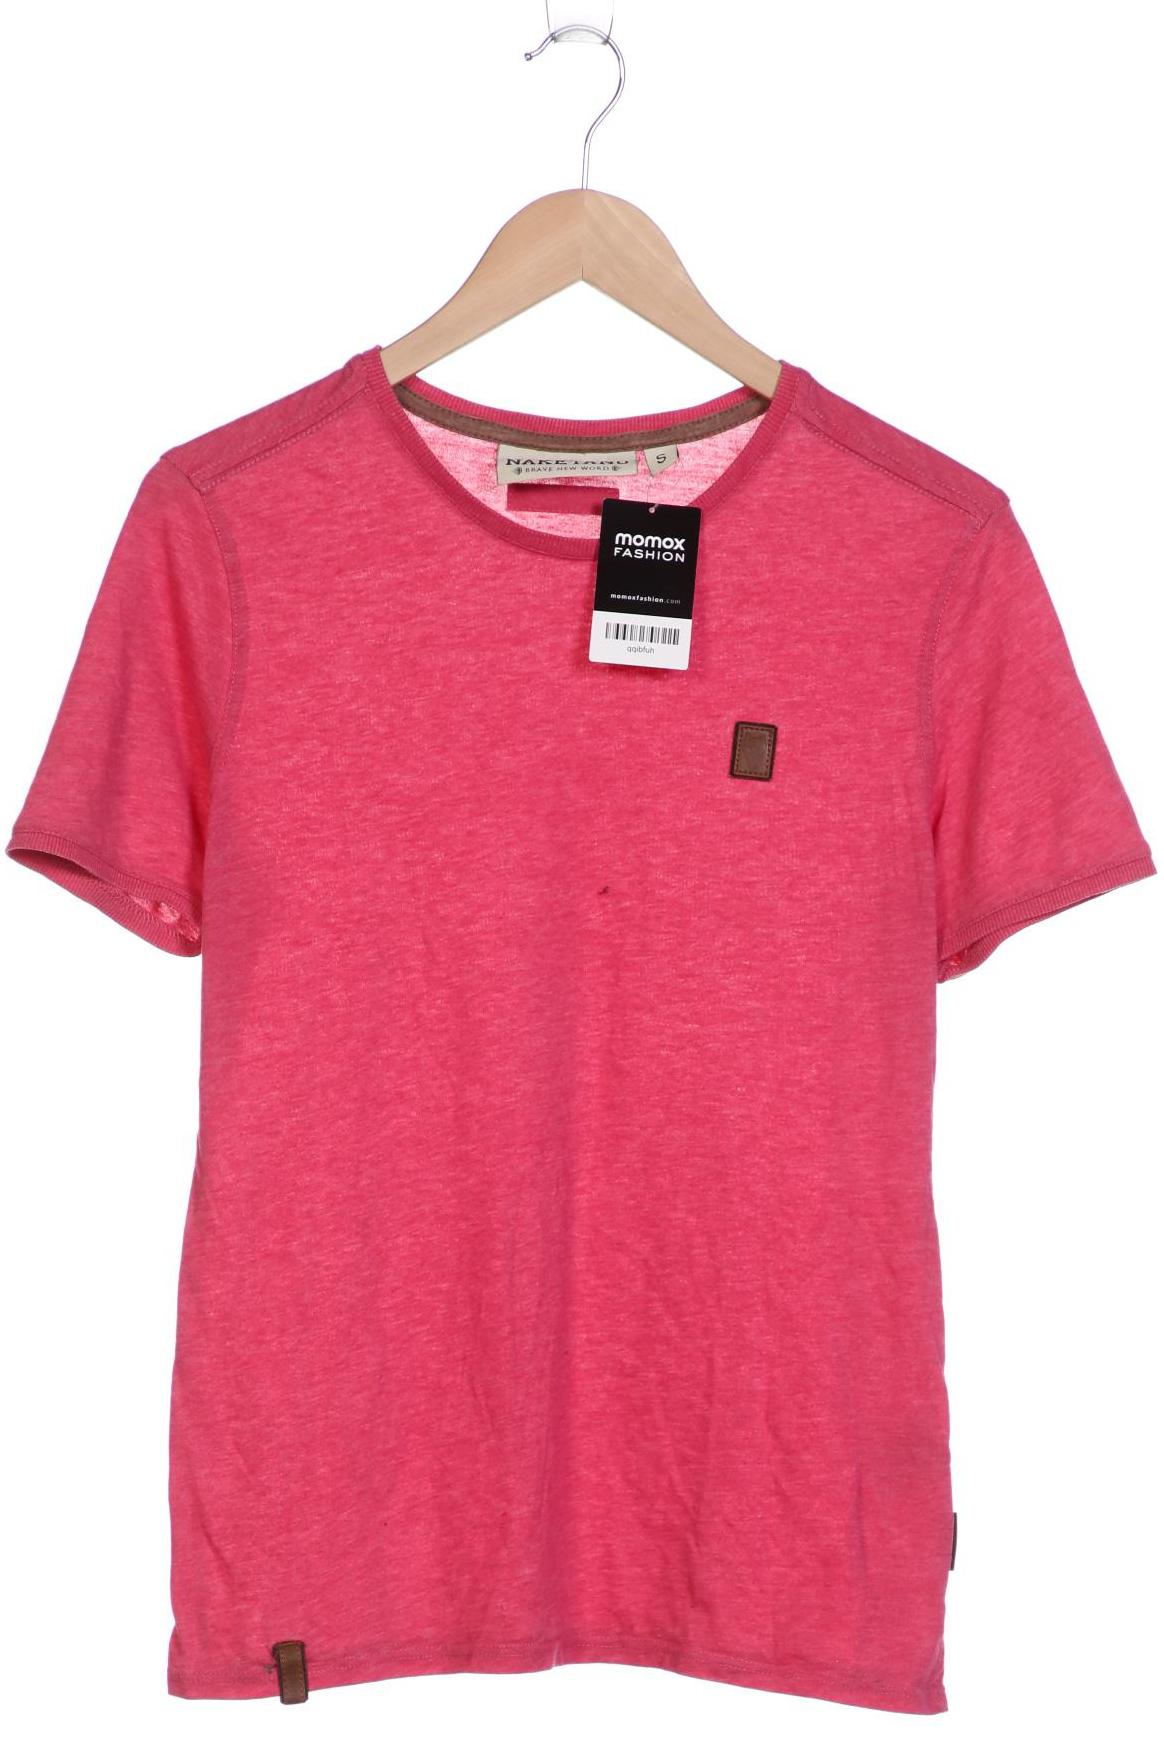 Naketano Damen T-Shirt, pink von Naketano